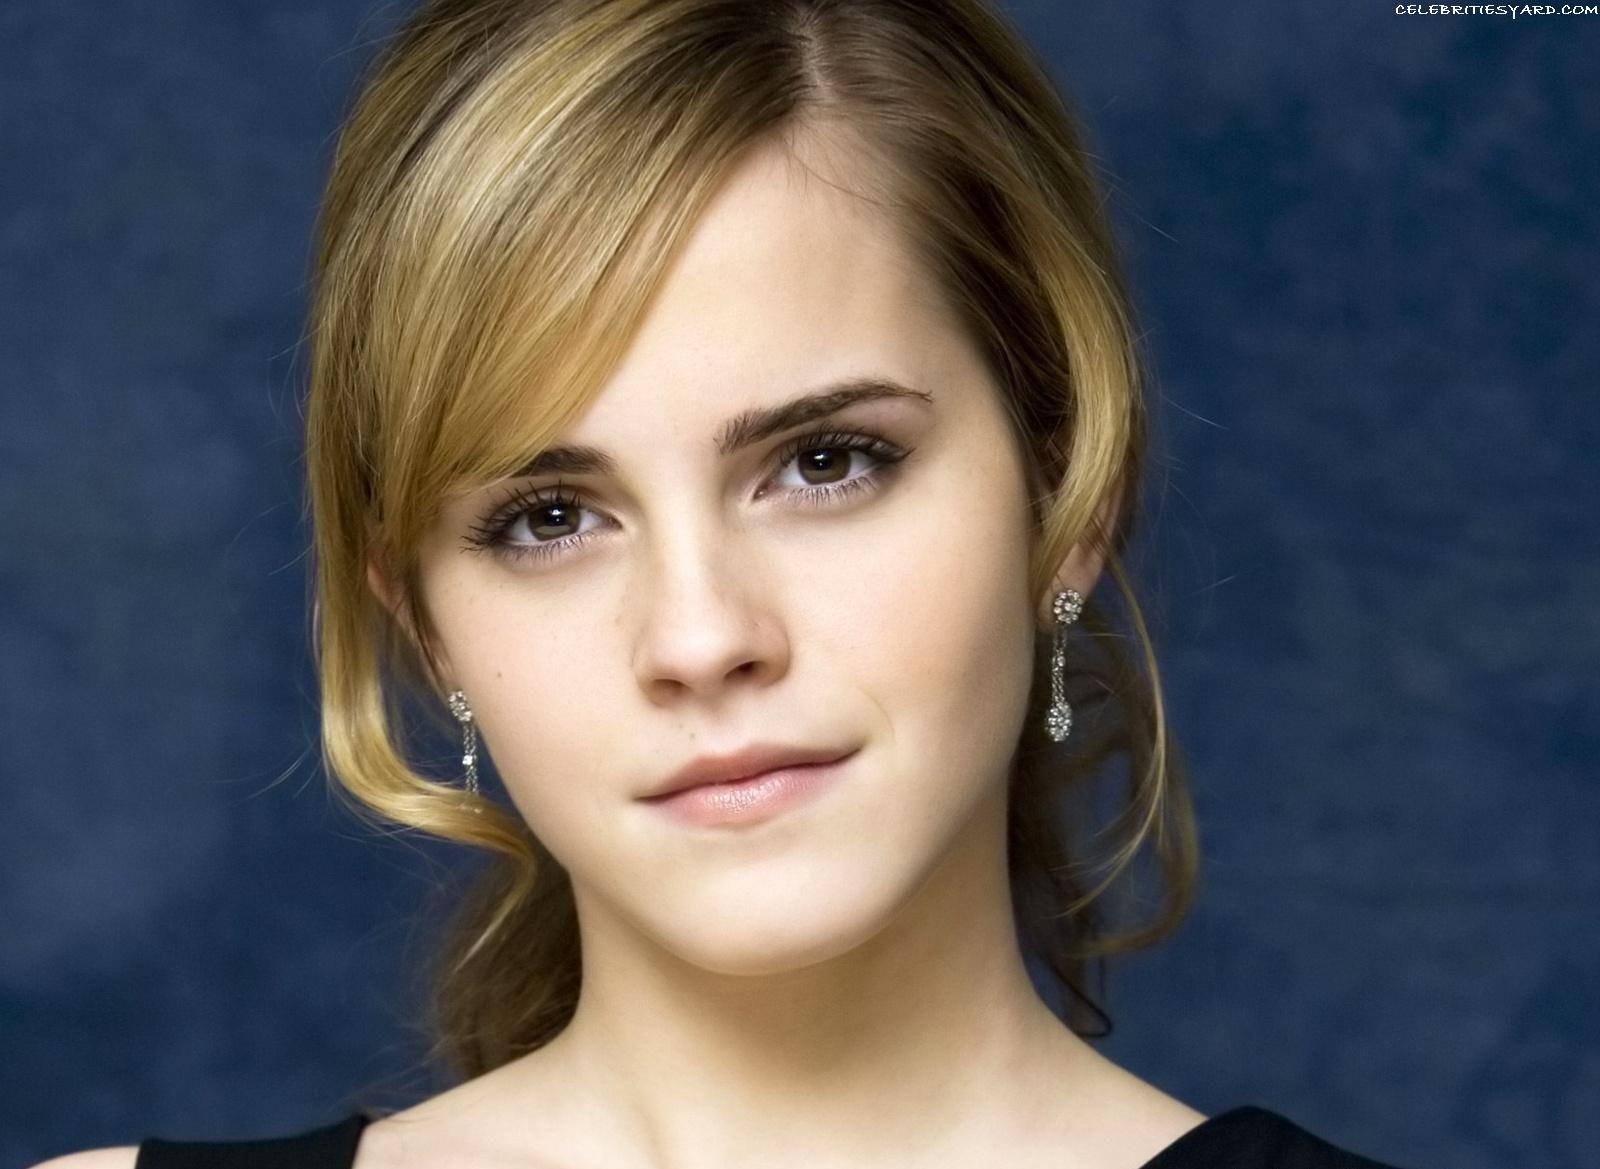 Baixar papel de parede para celular de Celebridade, Emma Watson gratuito.